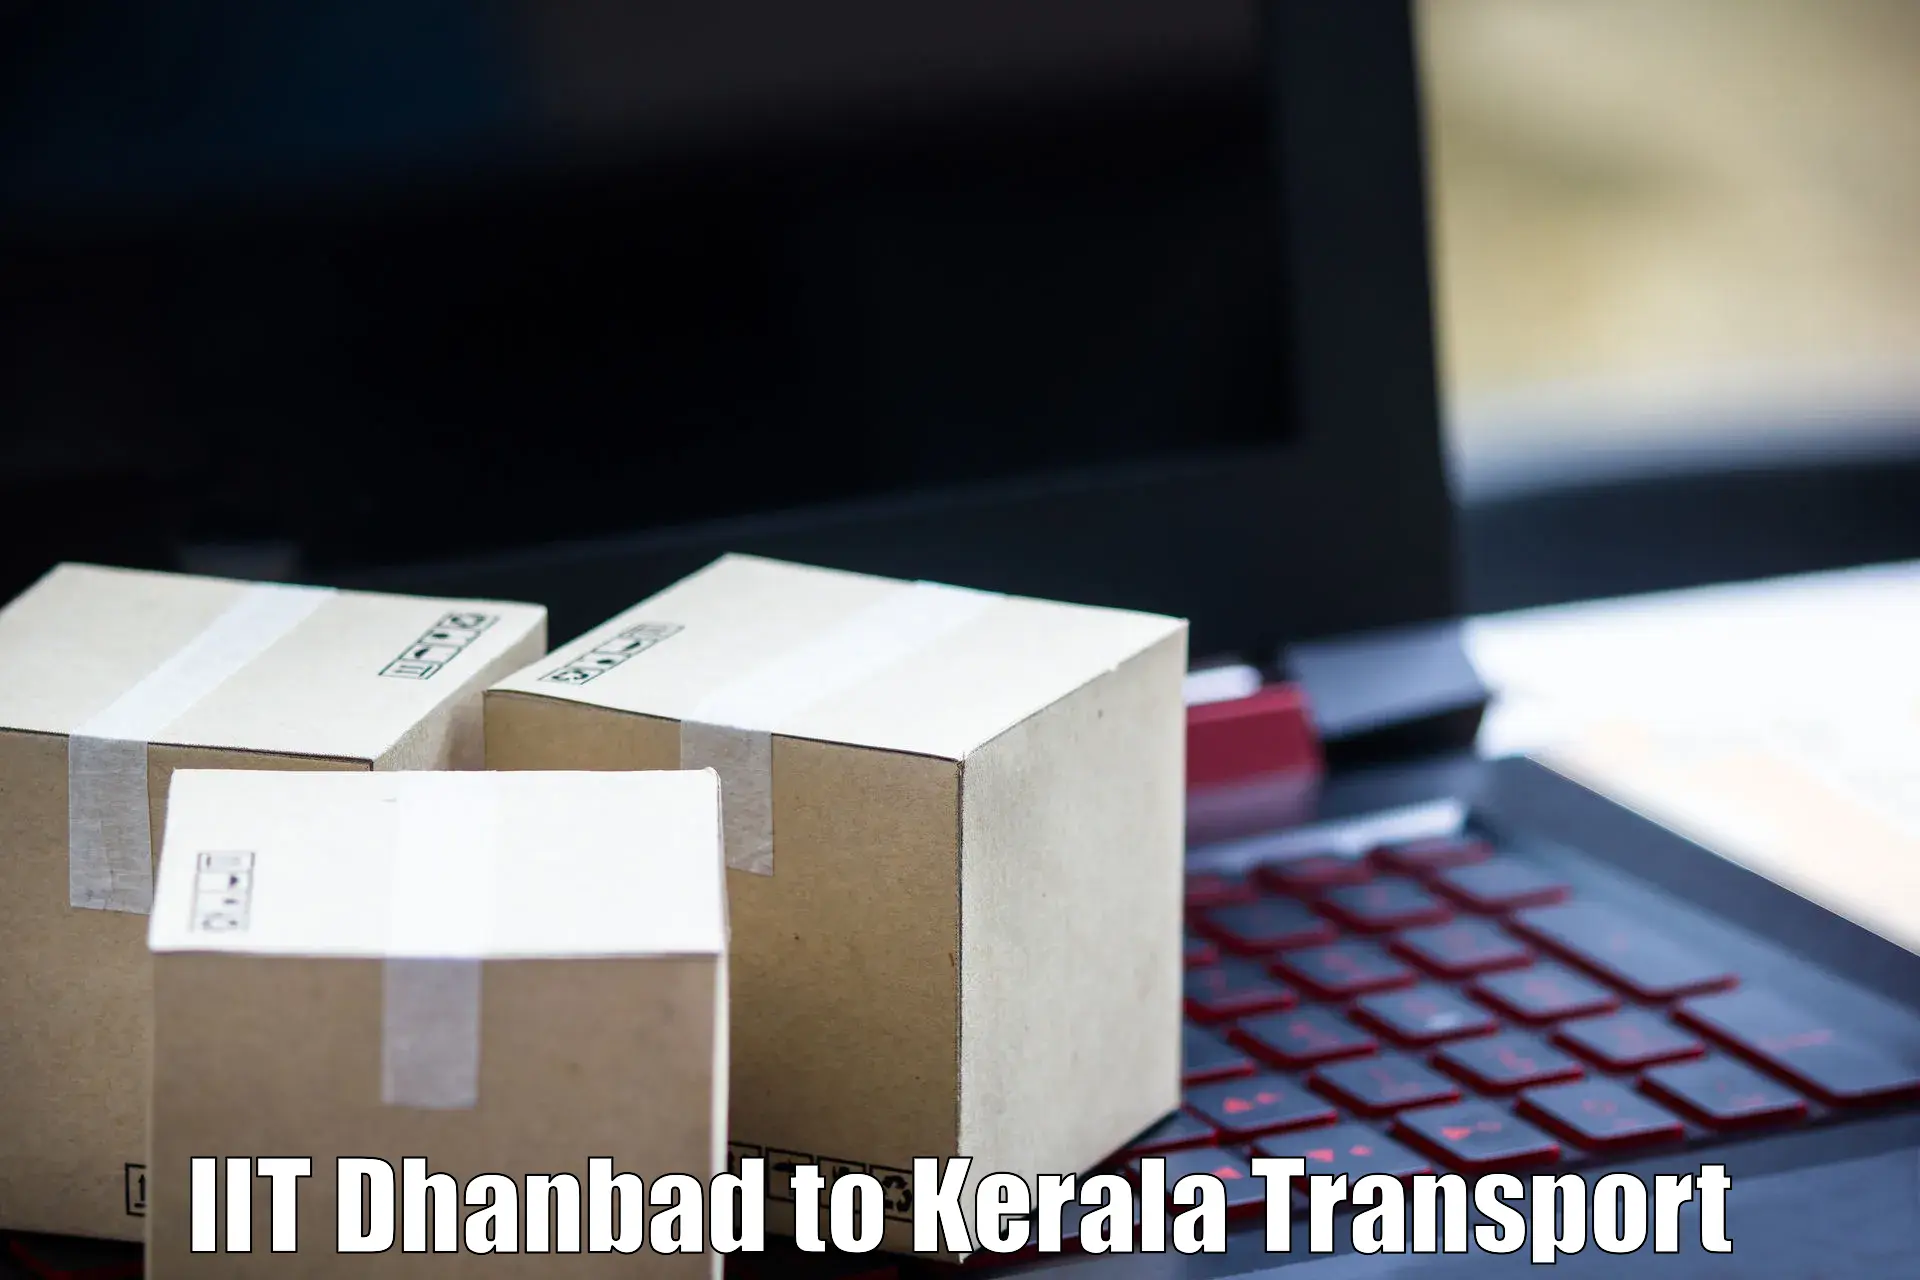 Nearby transport service IIT Dhanbad to Cochin Port Kochi